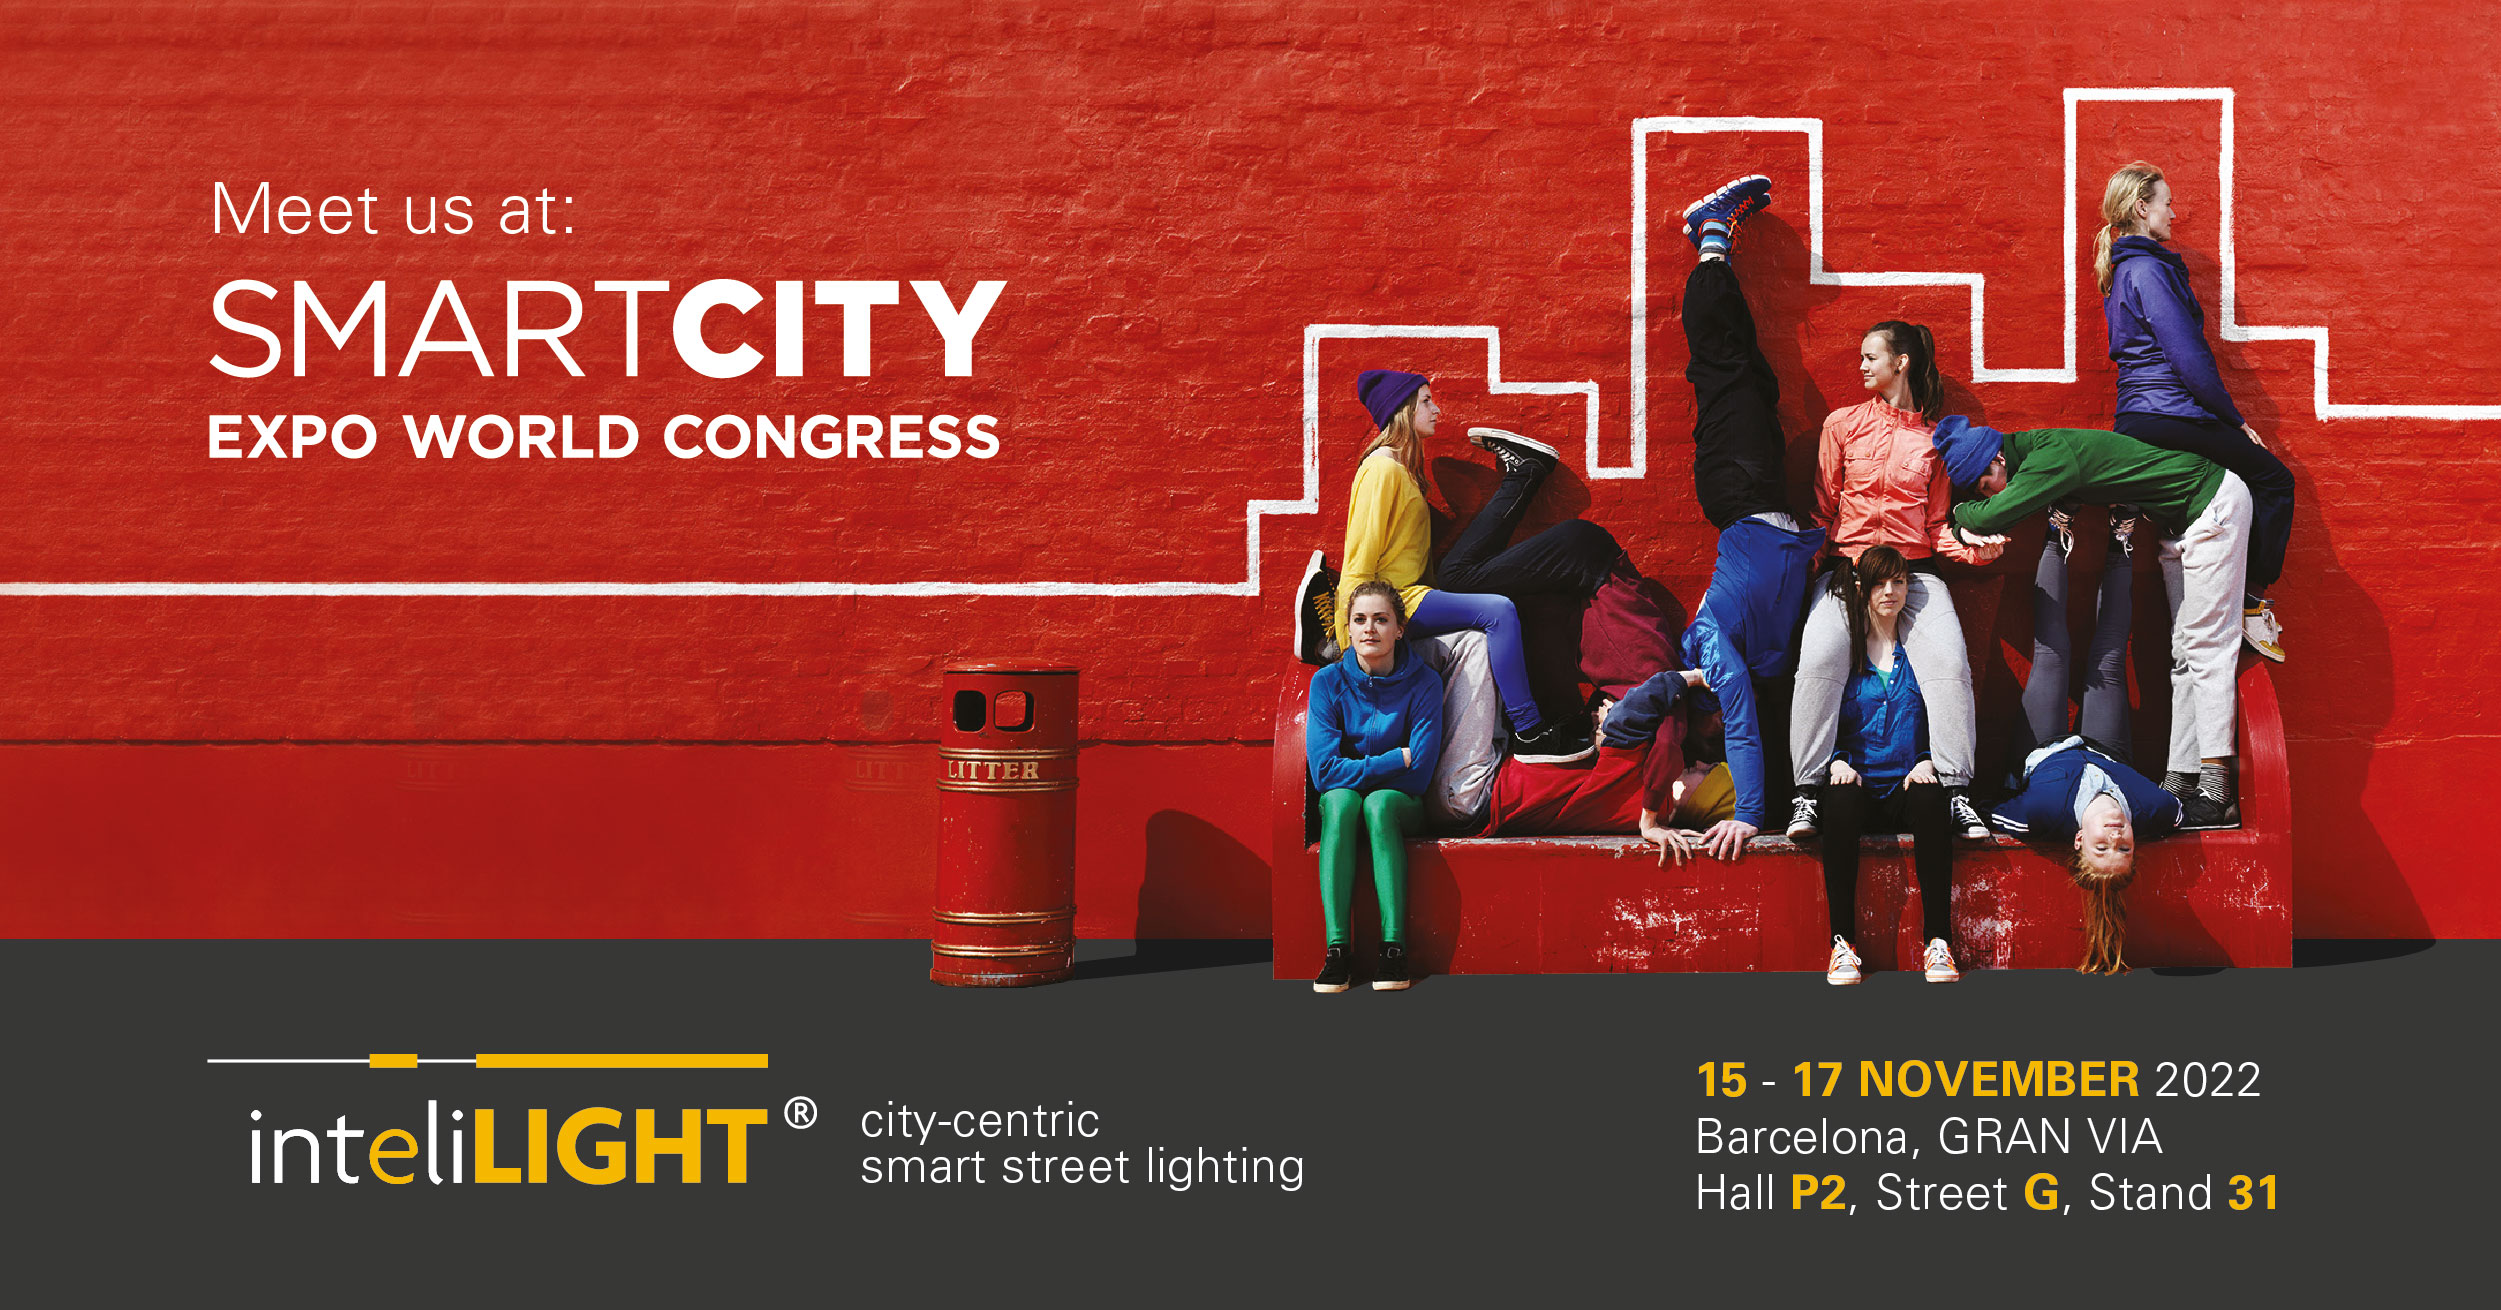 City-centric smart street lighting solution at light + building 2022